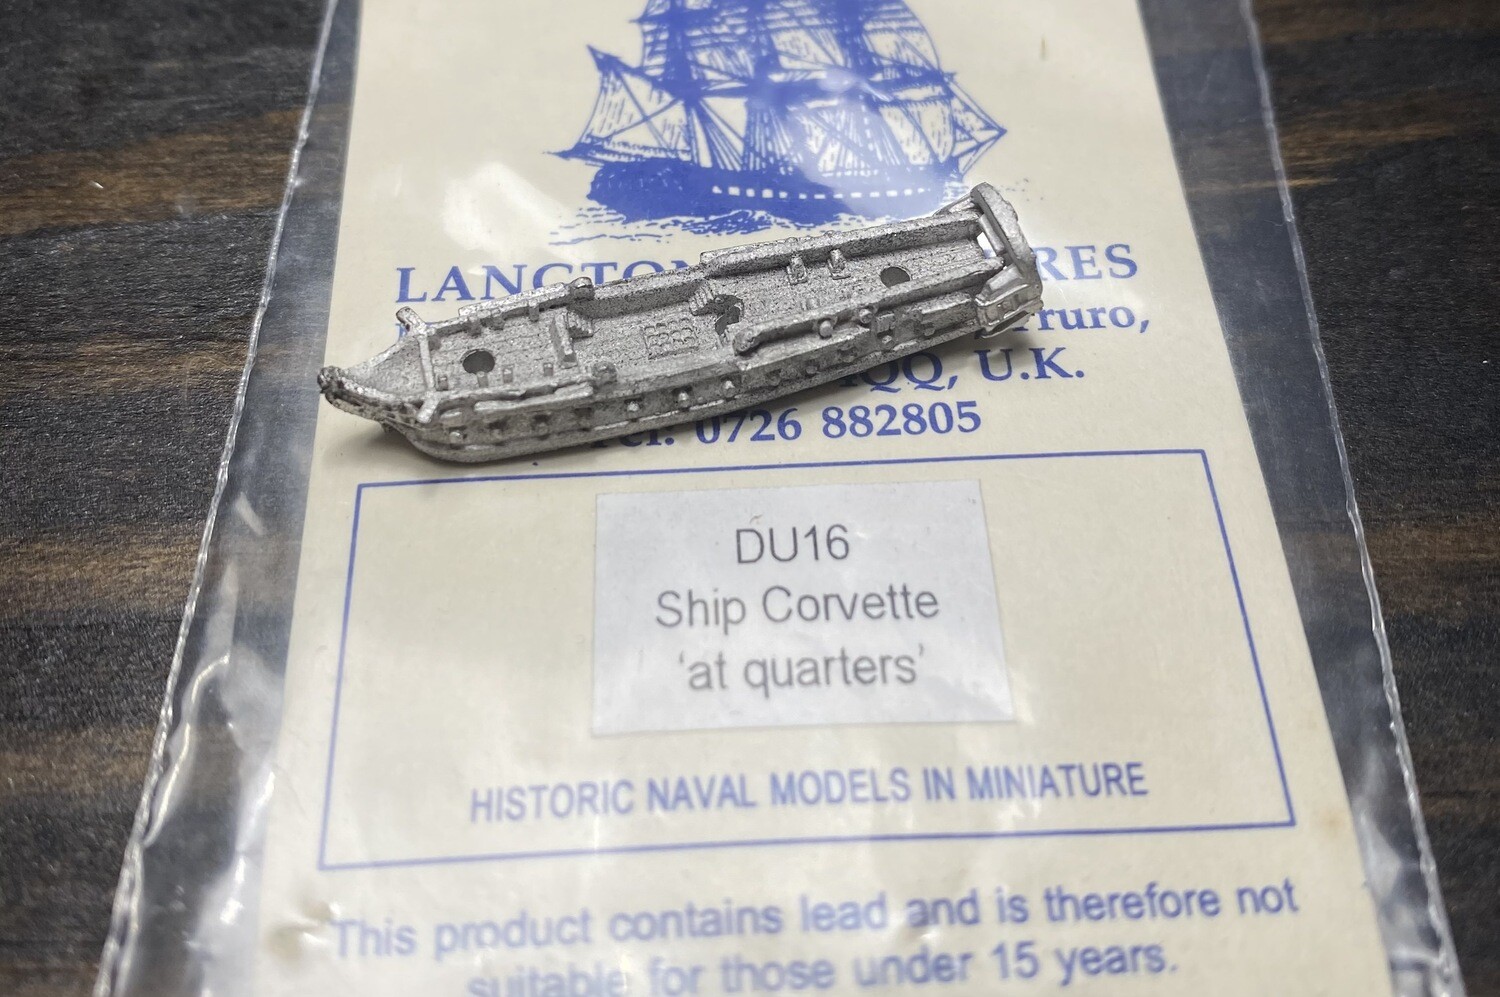 DU16 Ship Corvette at quarters